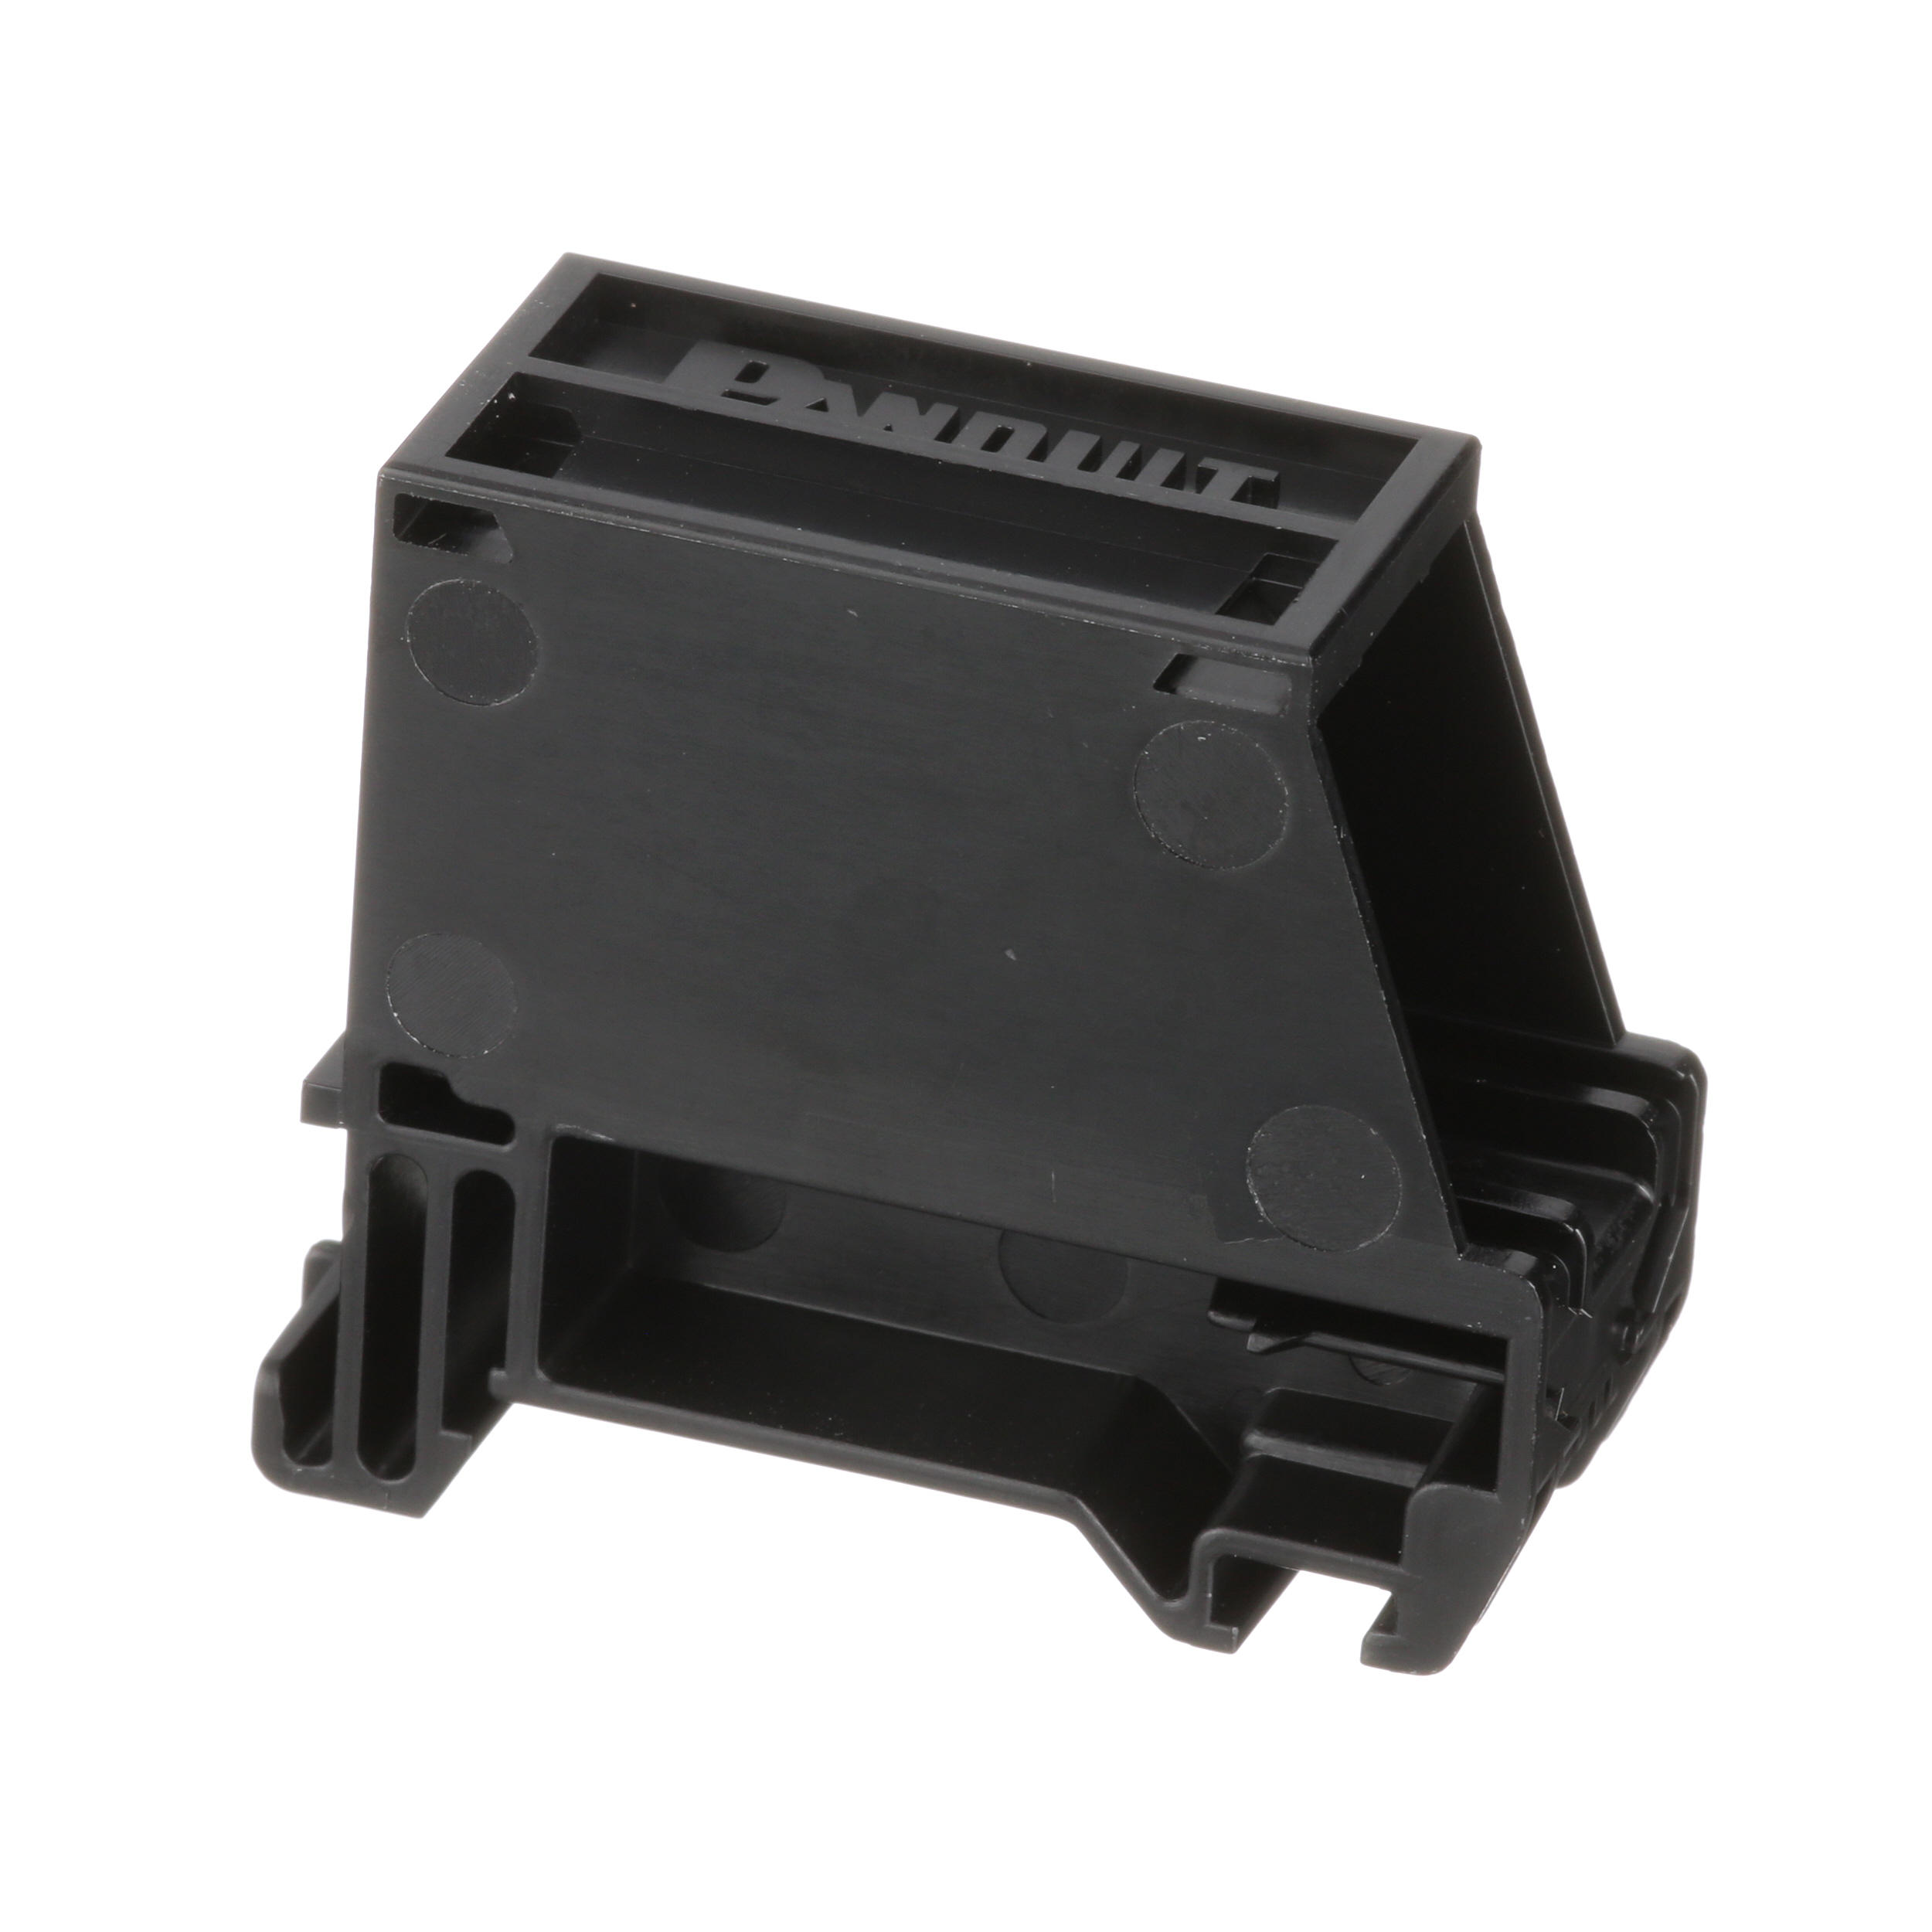 DIN rail mount adapter with label, singl single port, Black